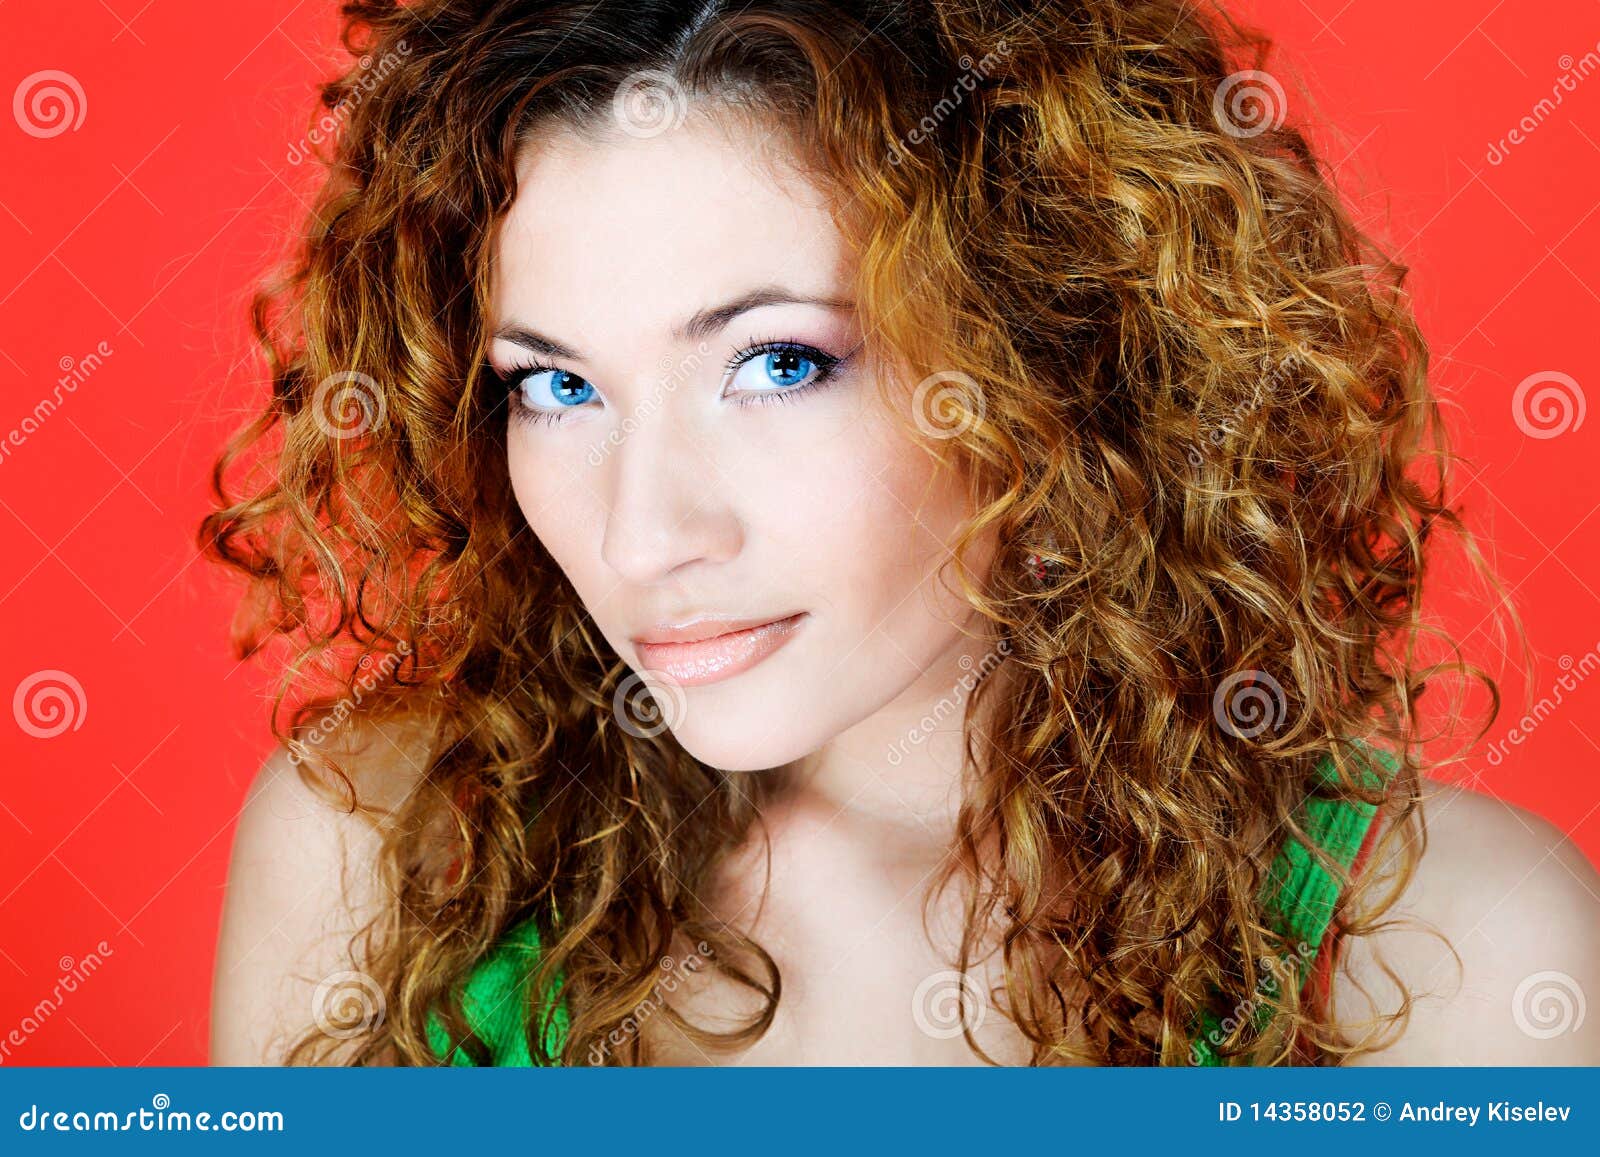 Glamorous woman stock photo. Image of beauty, close, person - 14358052